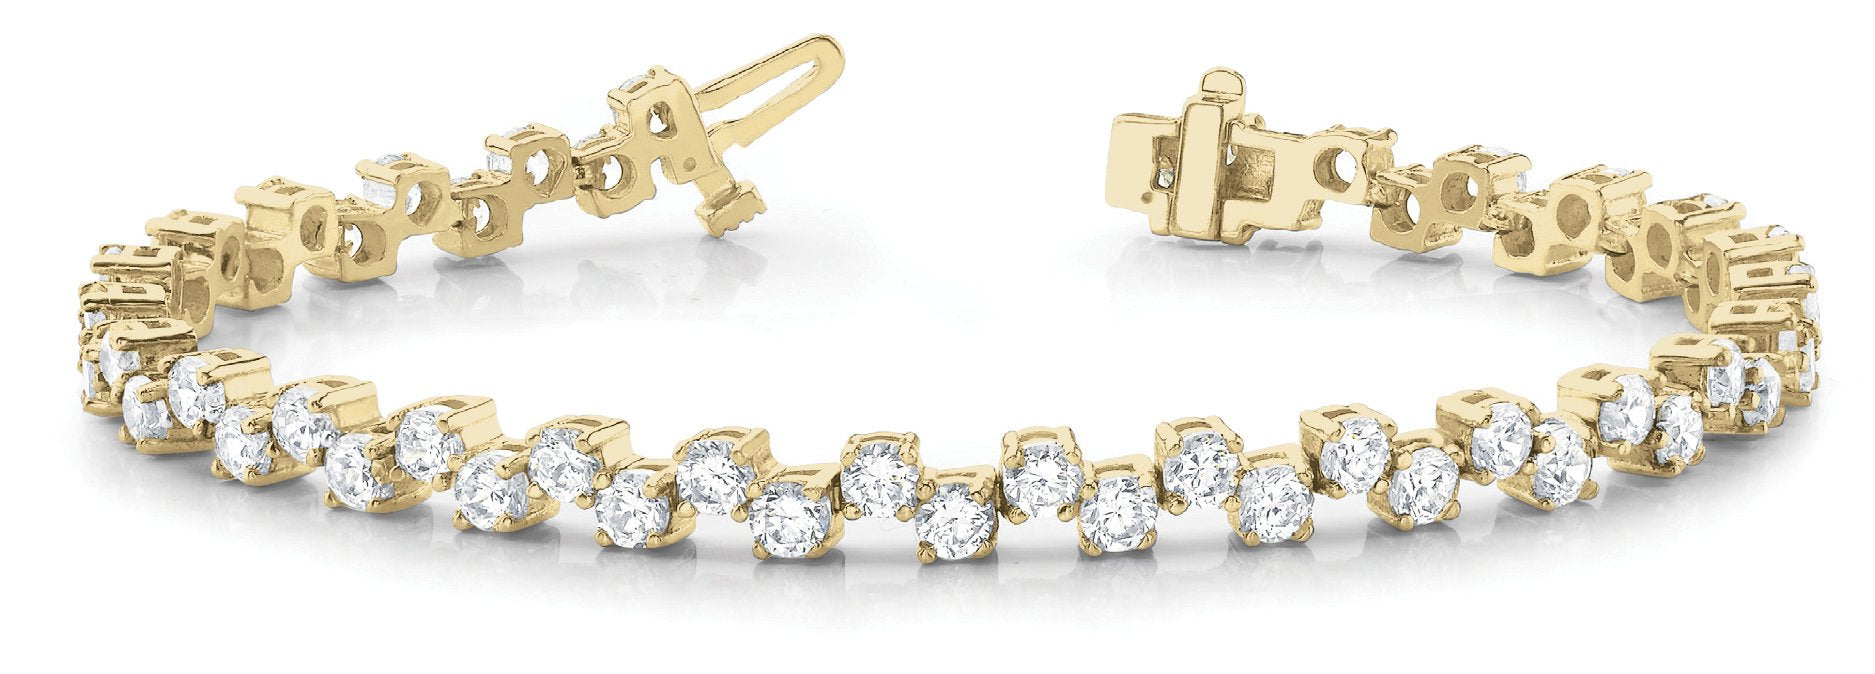 Fancy Diamond Bracelet Ladies 6.89ct tw - 14kt Yellow Gold